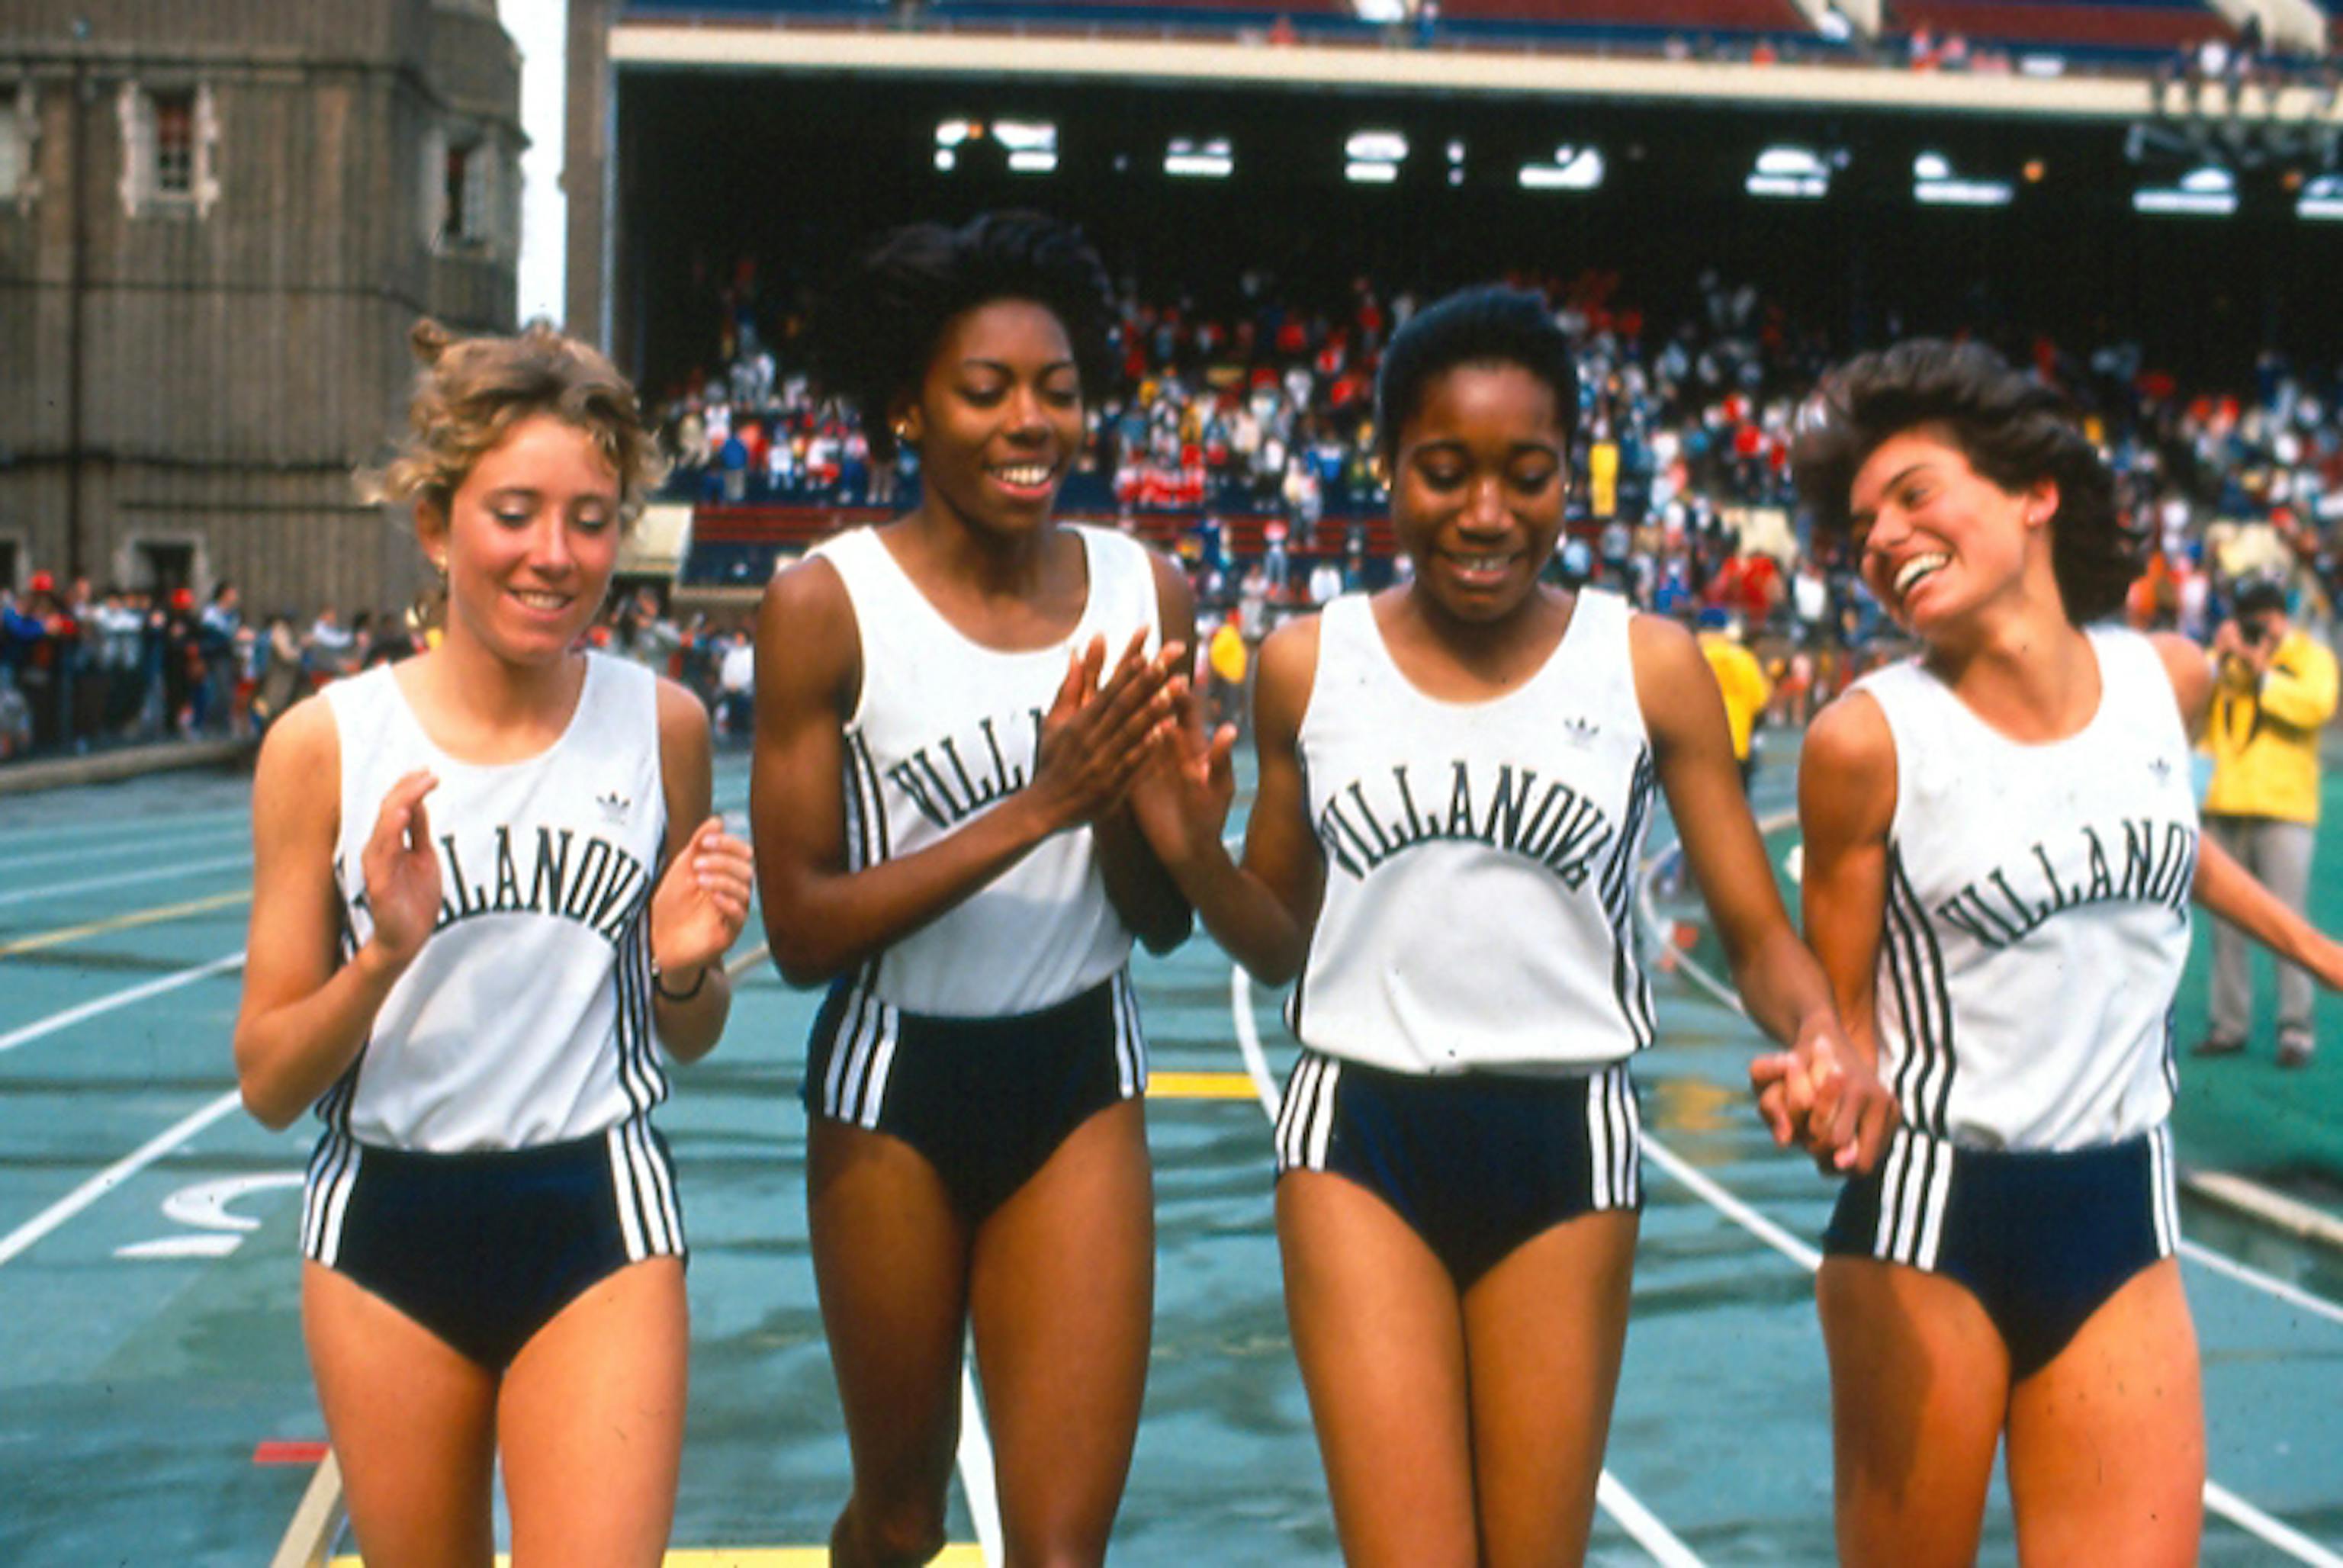 1988 Dmr 1 Photo Credit Villanova Athletics